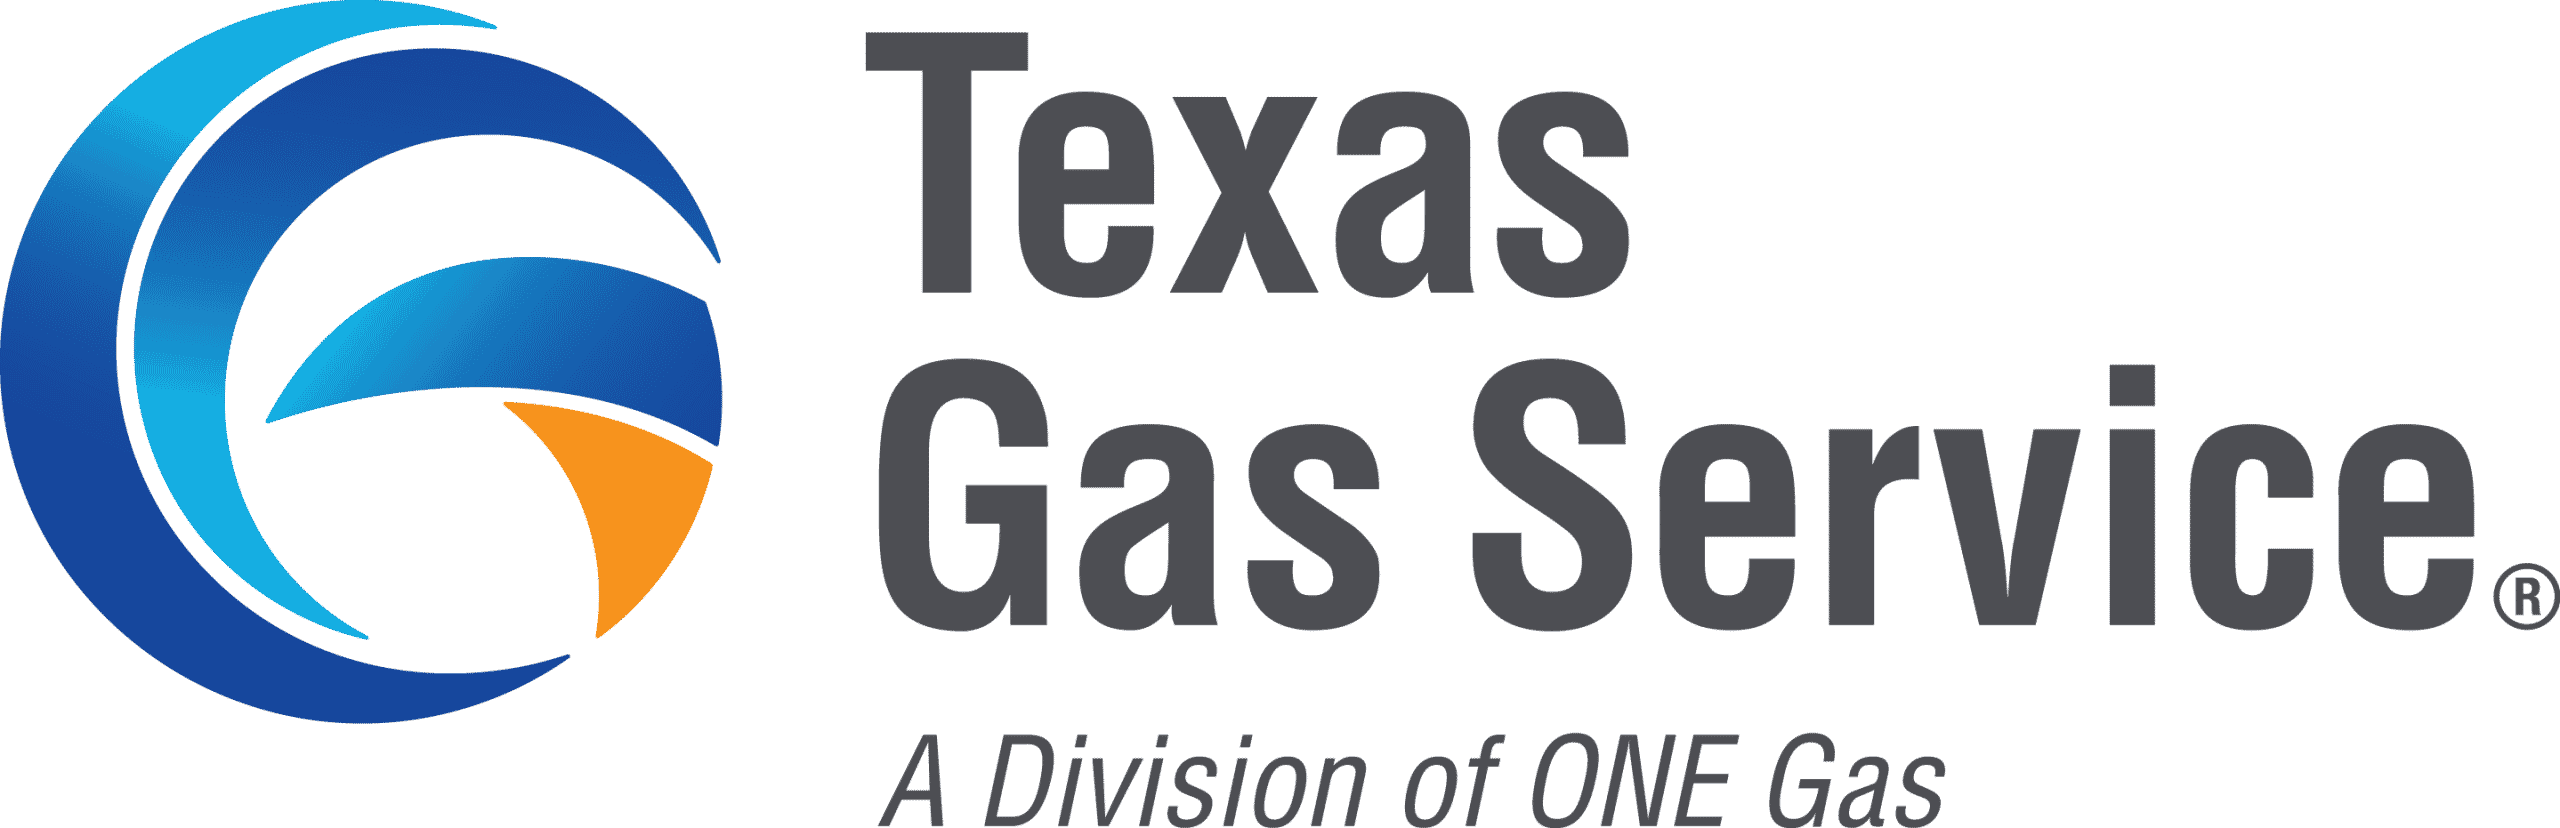 rgv new homes guide, rgv, mcallen, mission, edinburg, real estate, texas gas service